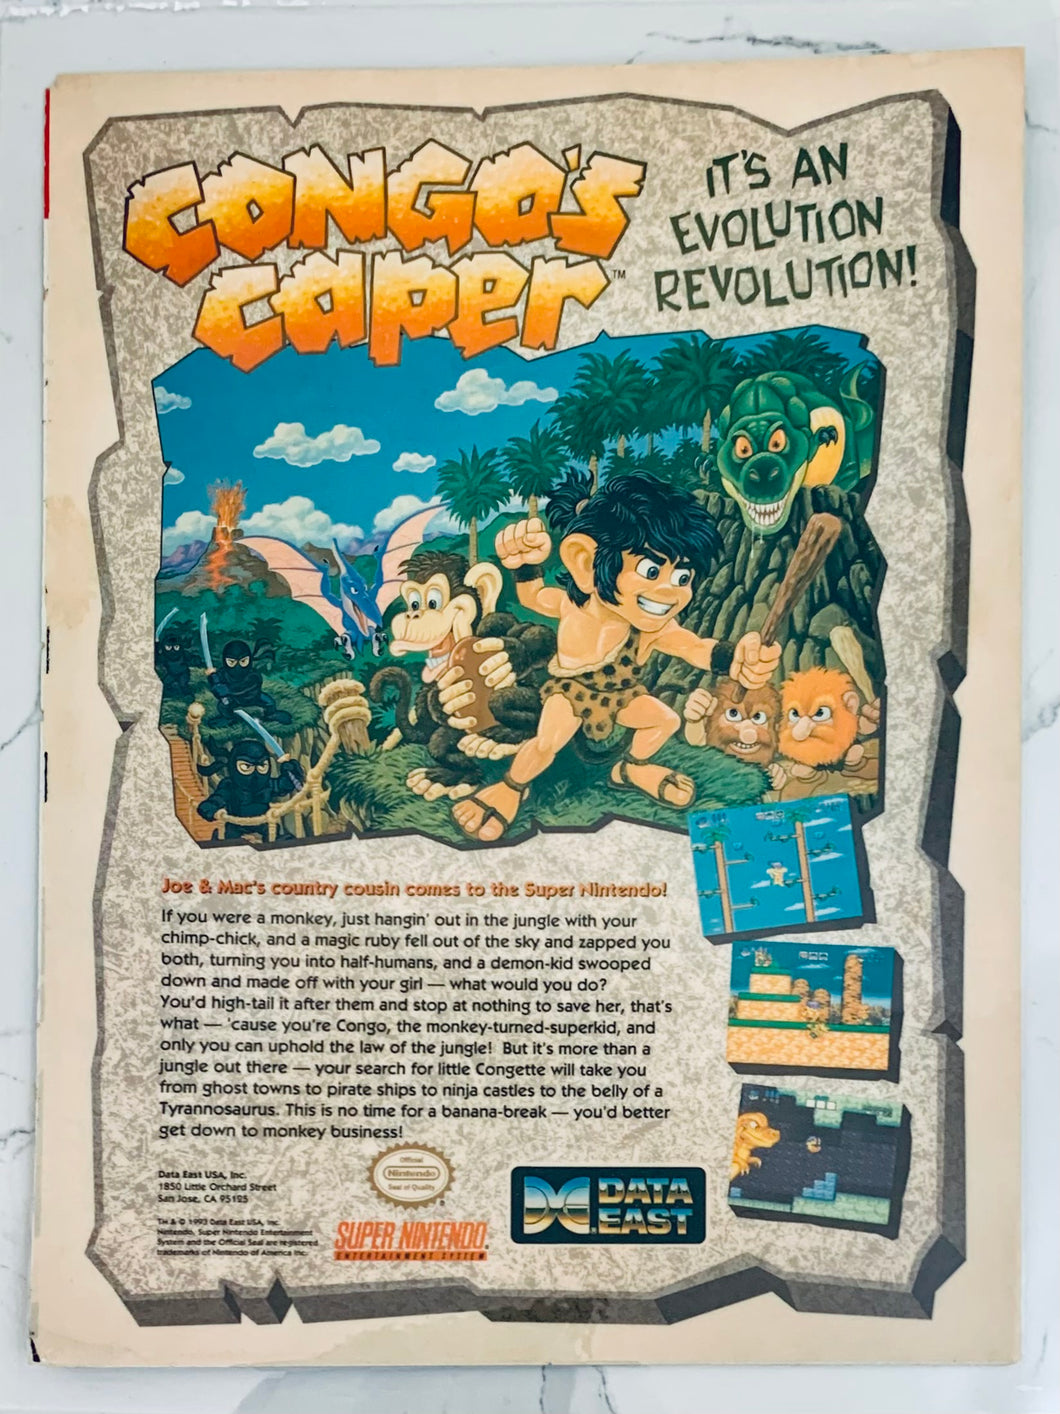 Congo’s Caper - SNES - Original Vintage Advertisement - Print Ads - Laminated A4 Poster